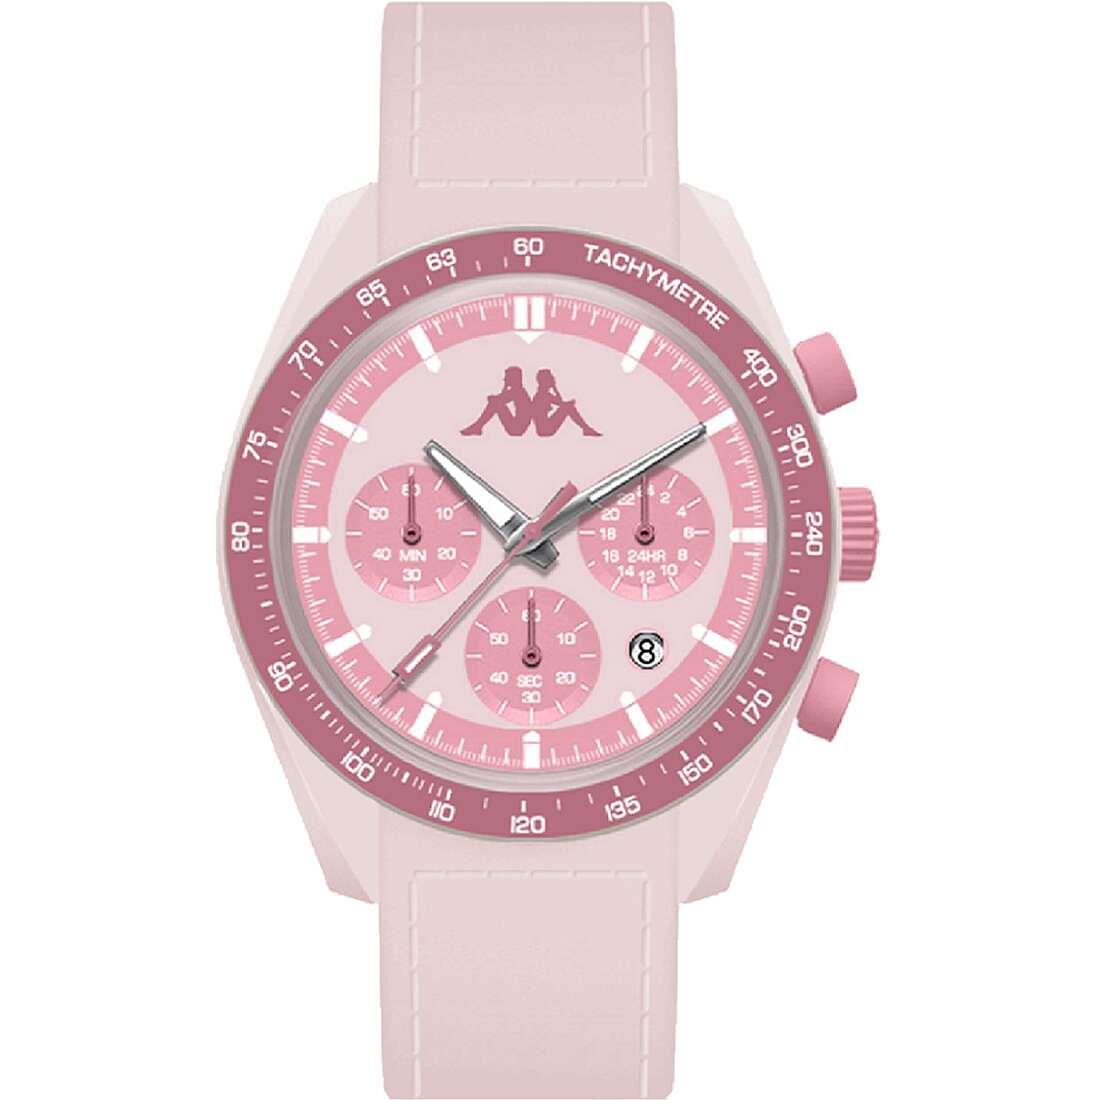 45mm pink case watch - KAPPA